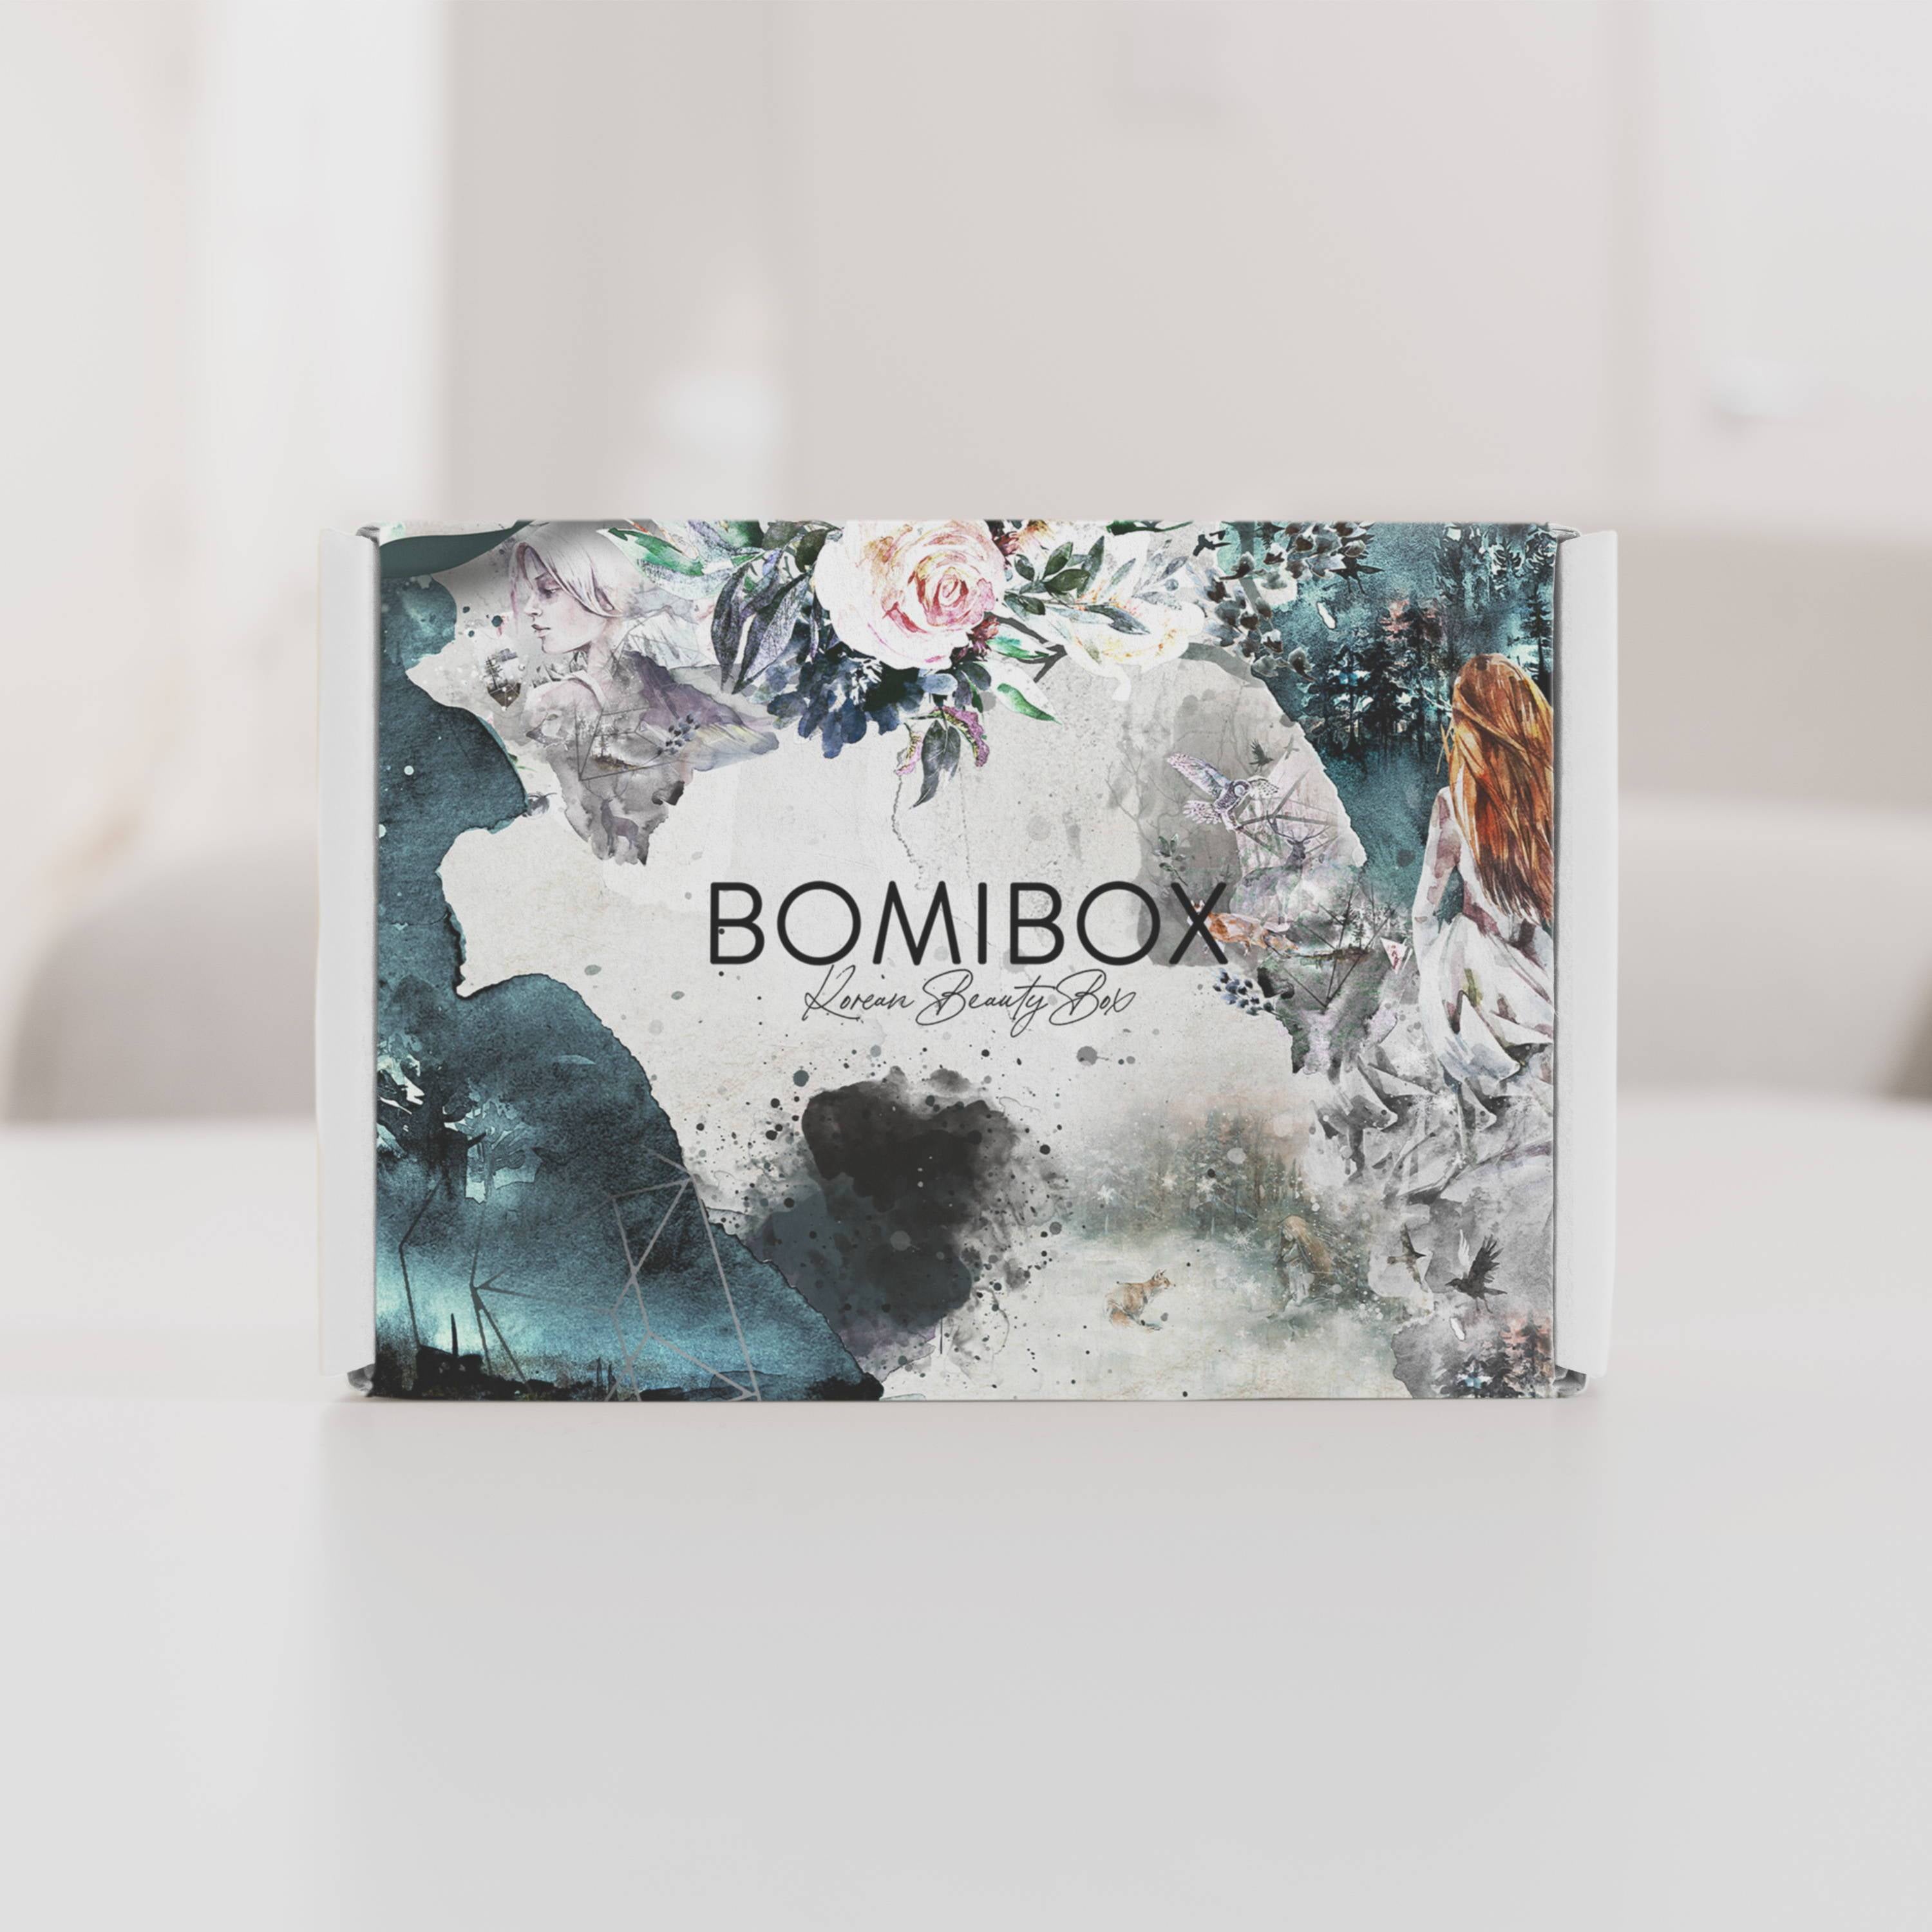 Past Boxes-Bomibox August 2020 - Korean Beauty Box Monthly Korean Skincare Subscription